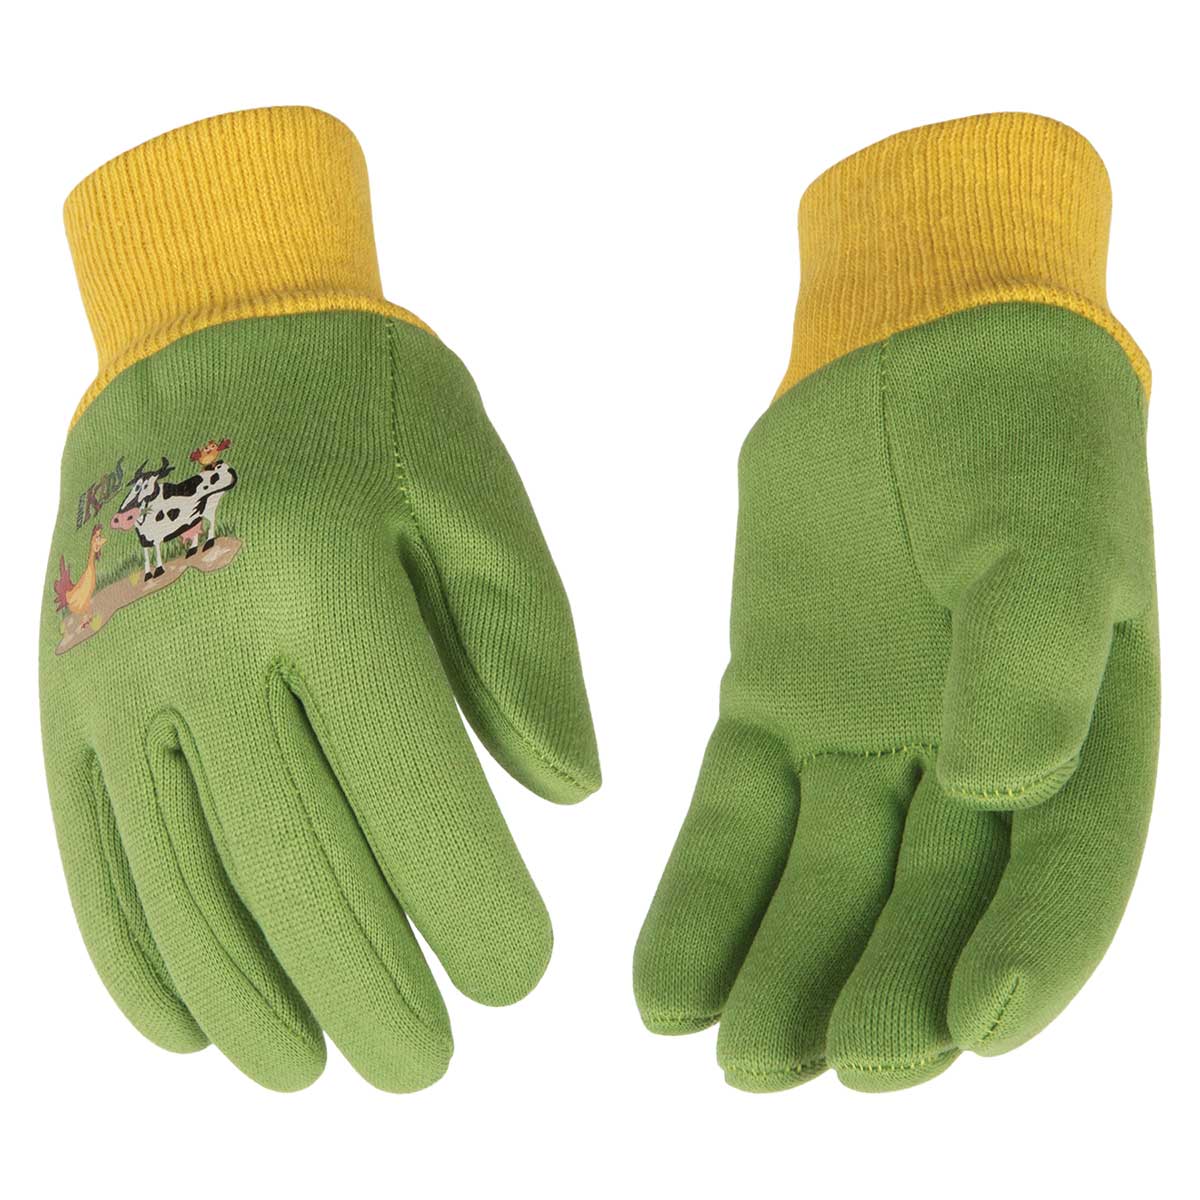 Kinco Kid's Farm Friends 8 oz Jersey Gloves